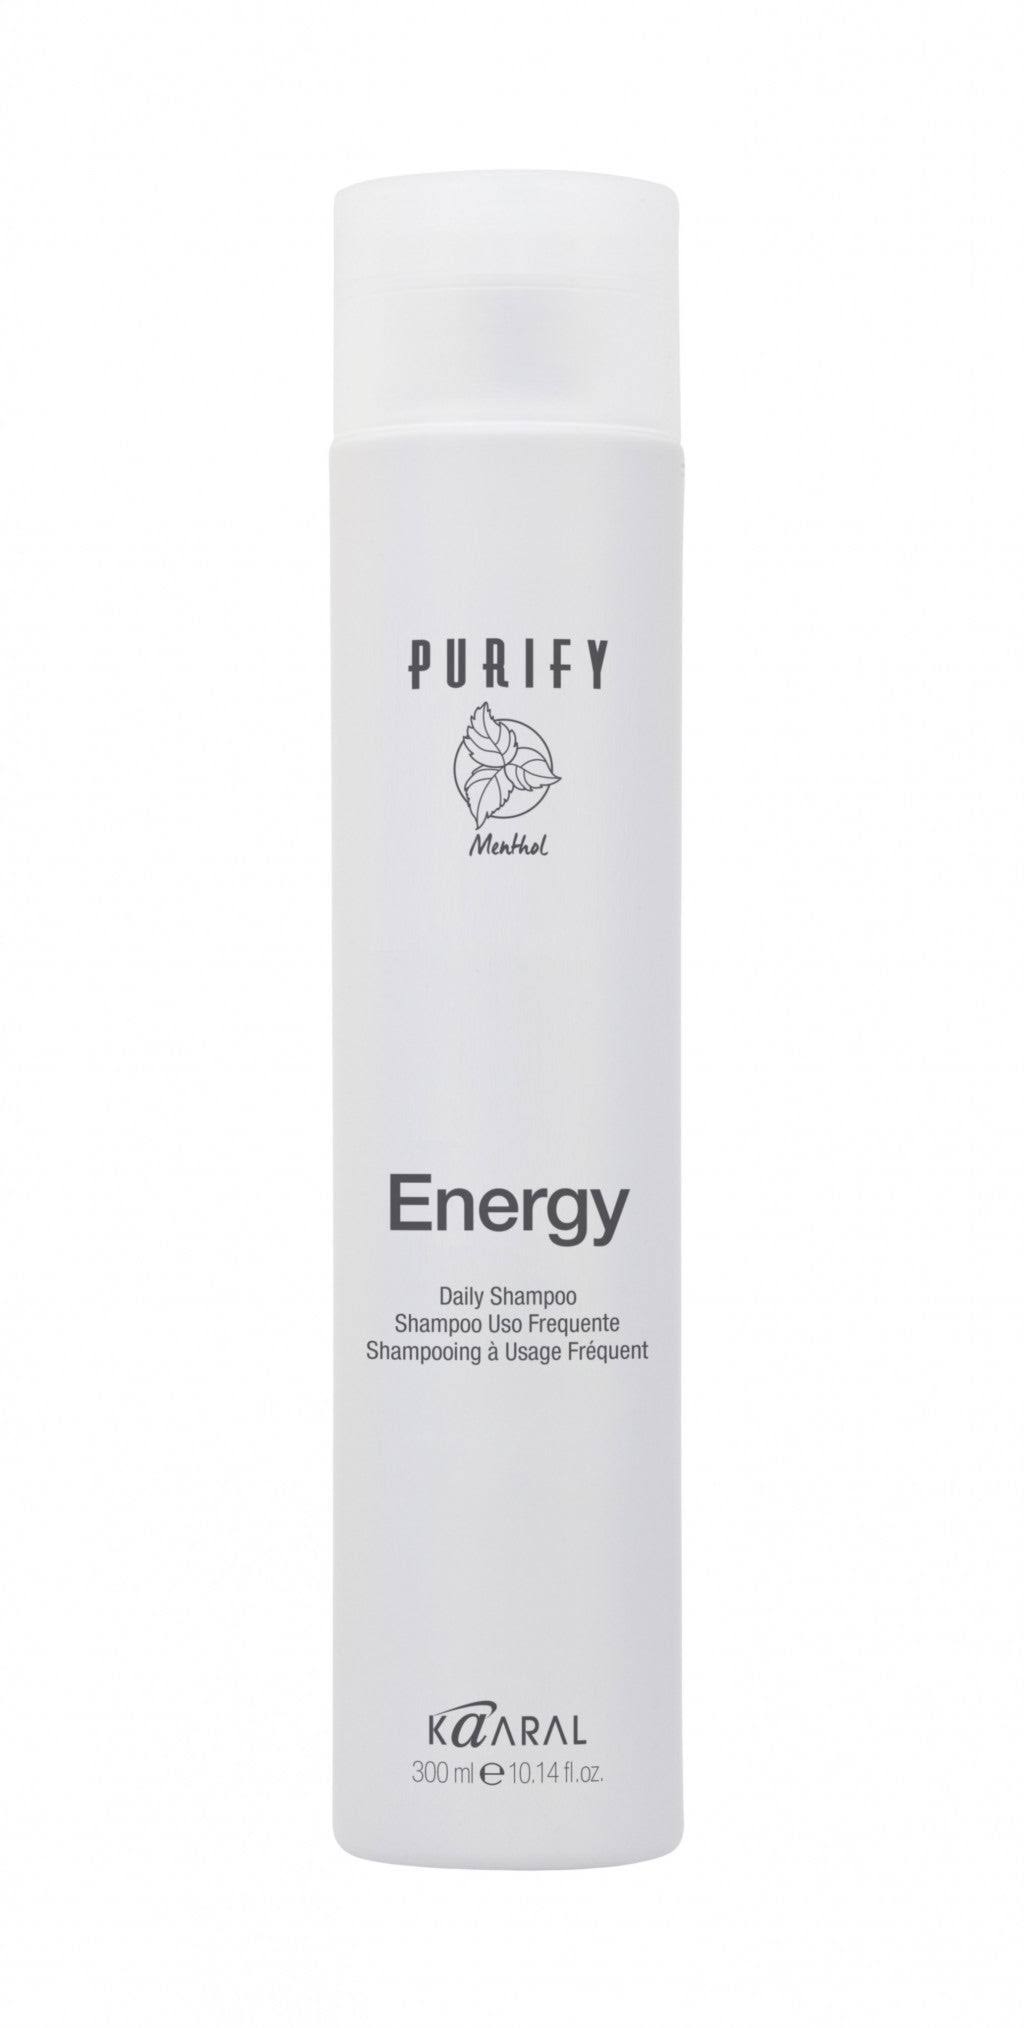 Kaaral Purify Energy Shampoo - 300ml